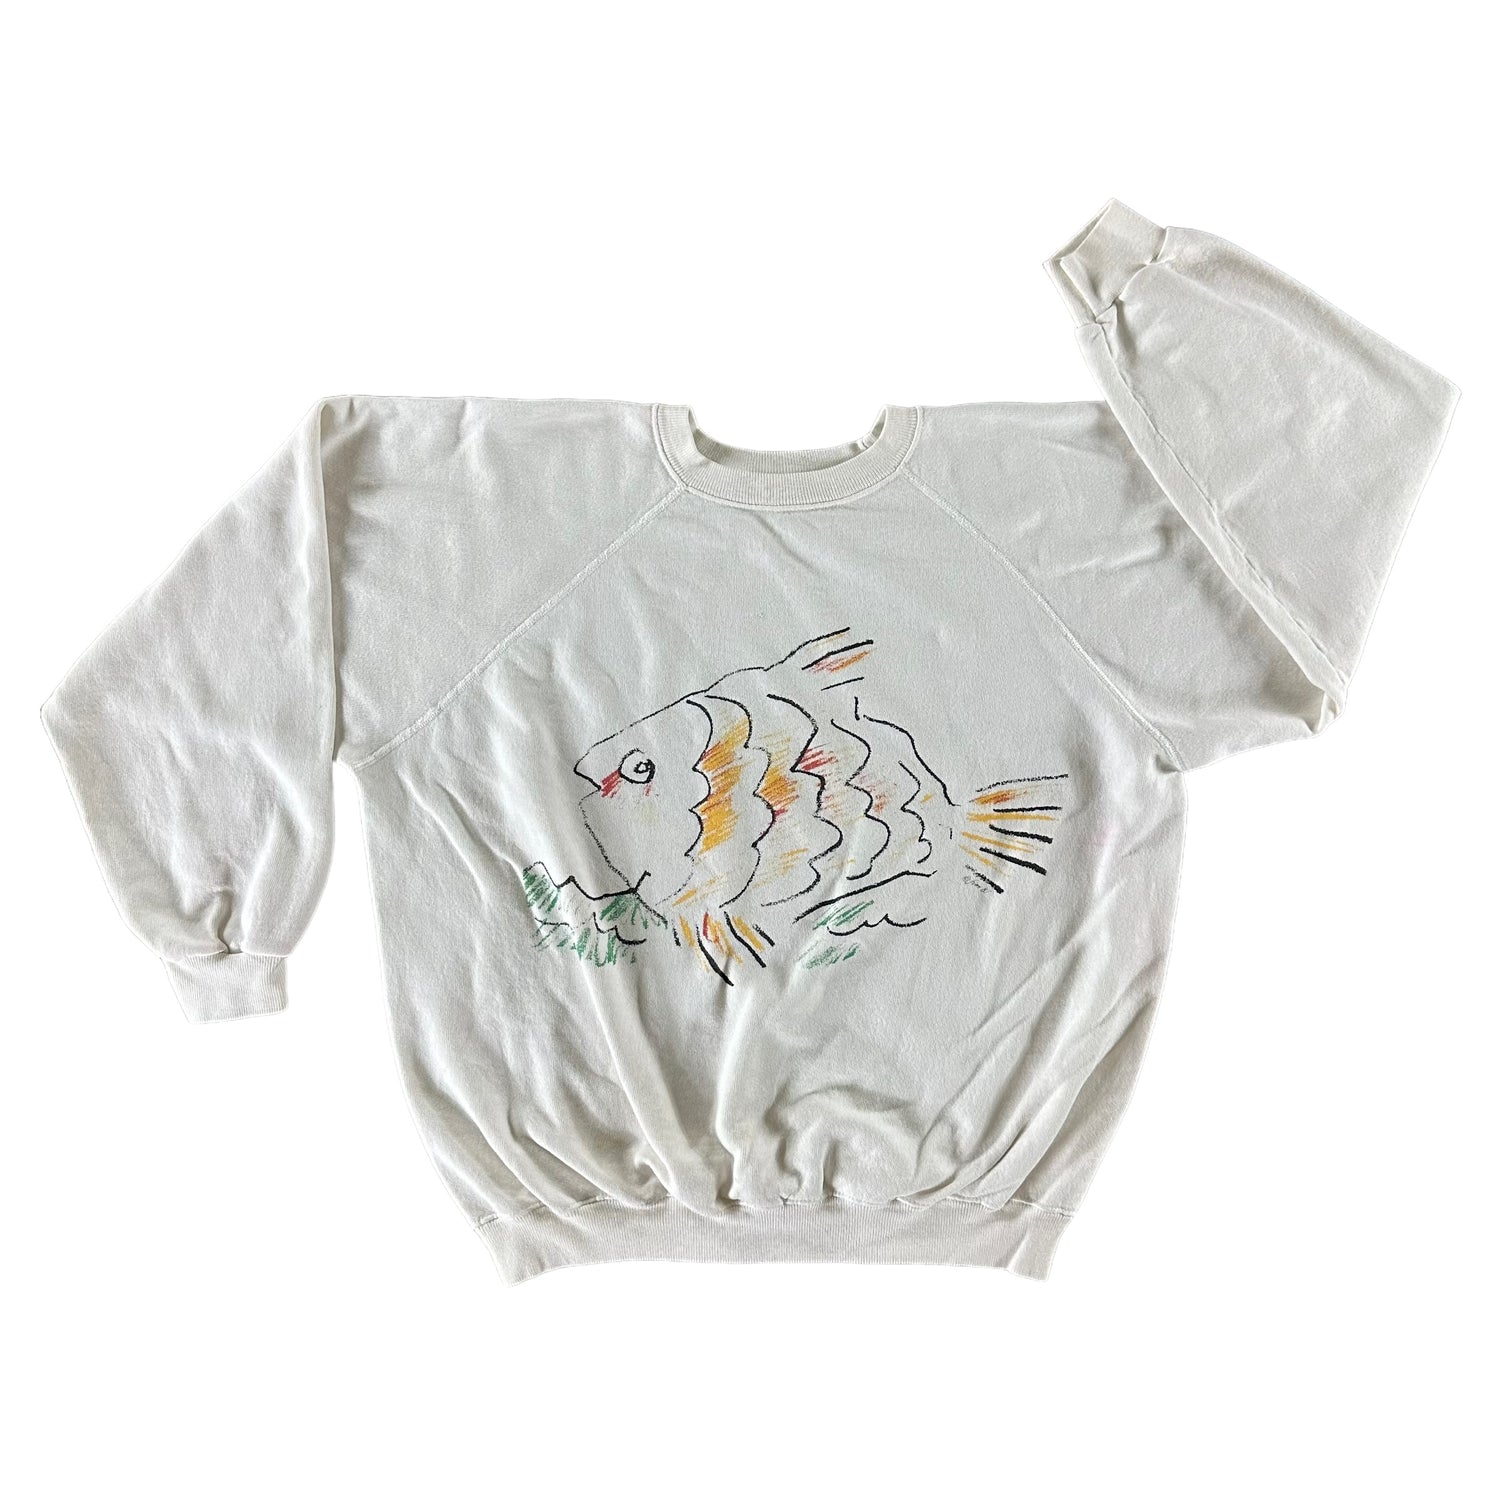 Vintage 1990s Fish Sweatshirt size XL